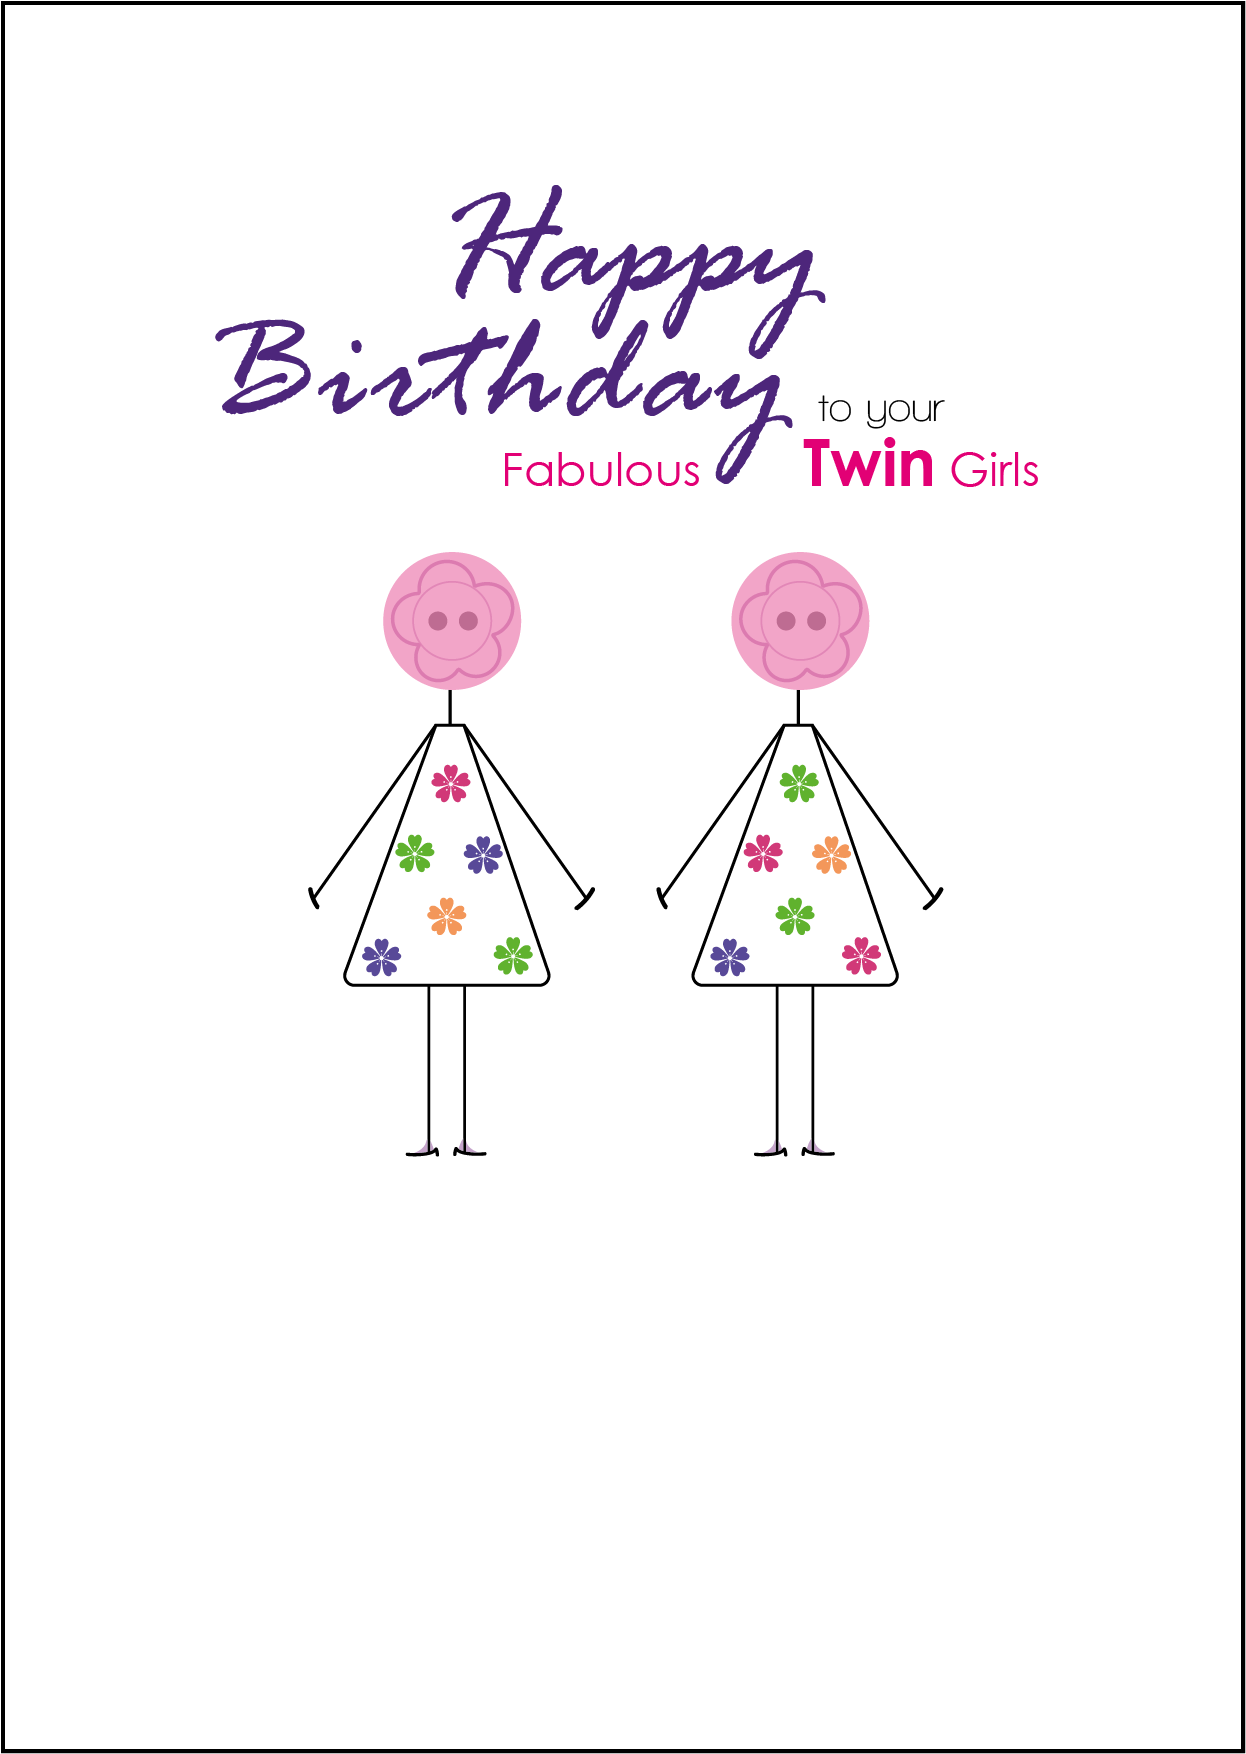 Twin Girls Birthday Card, Twins Birthday Cards UK, Personalised Twin Birthday Cards, Birthday card for your Twin Girls, Twins Birthday Card